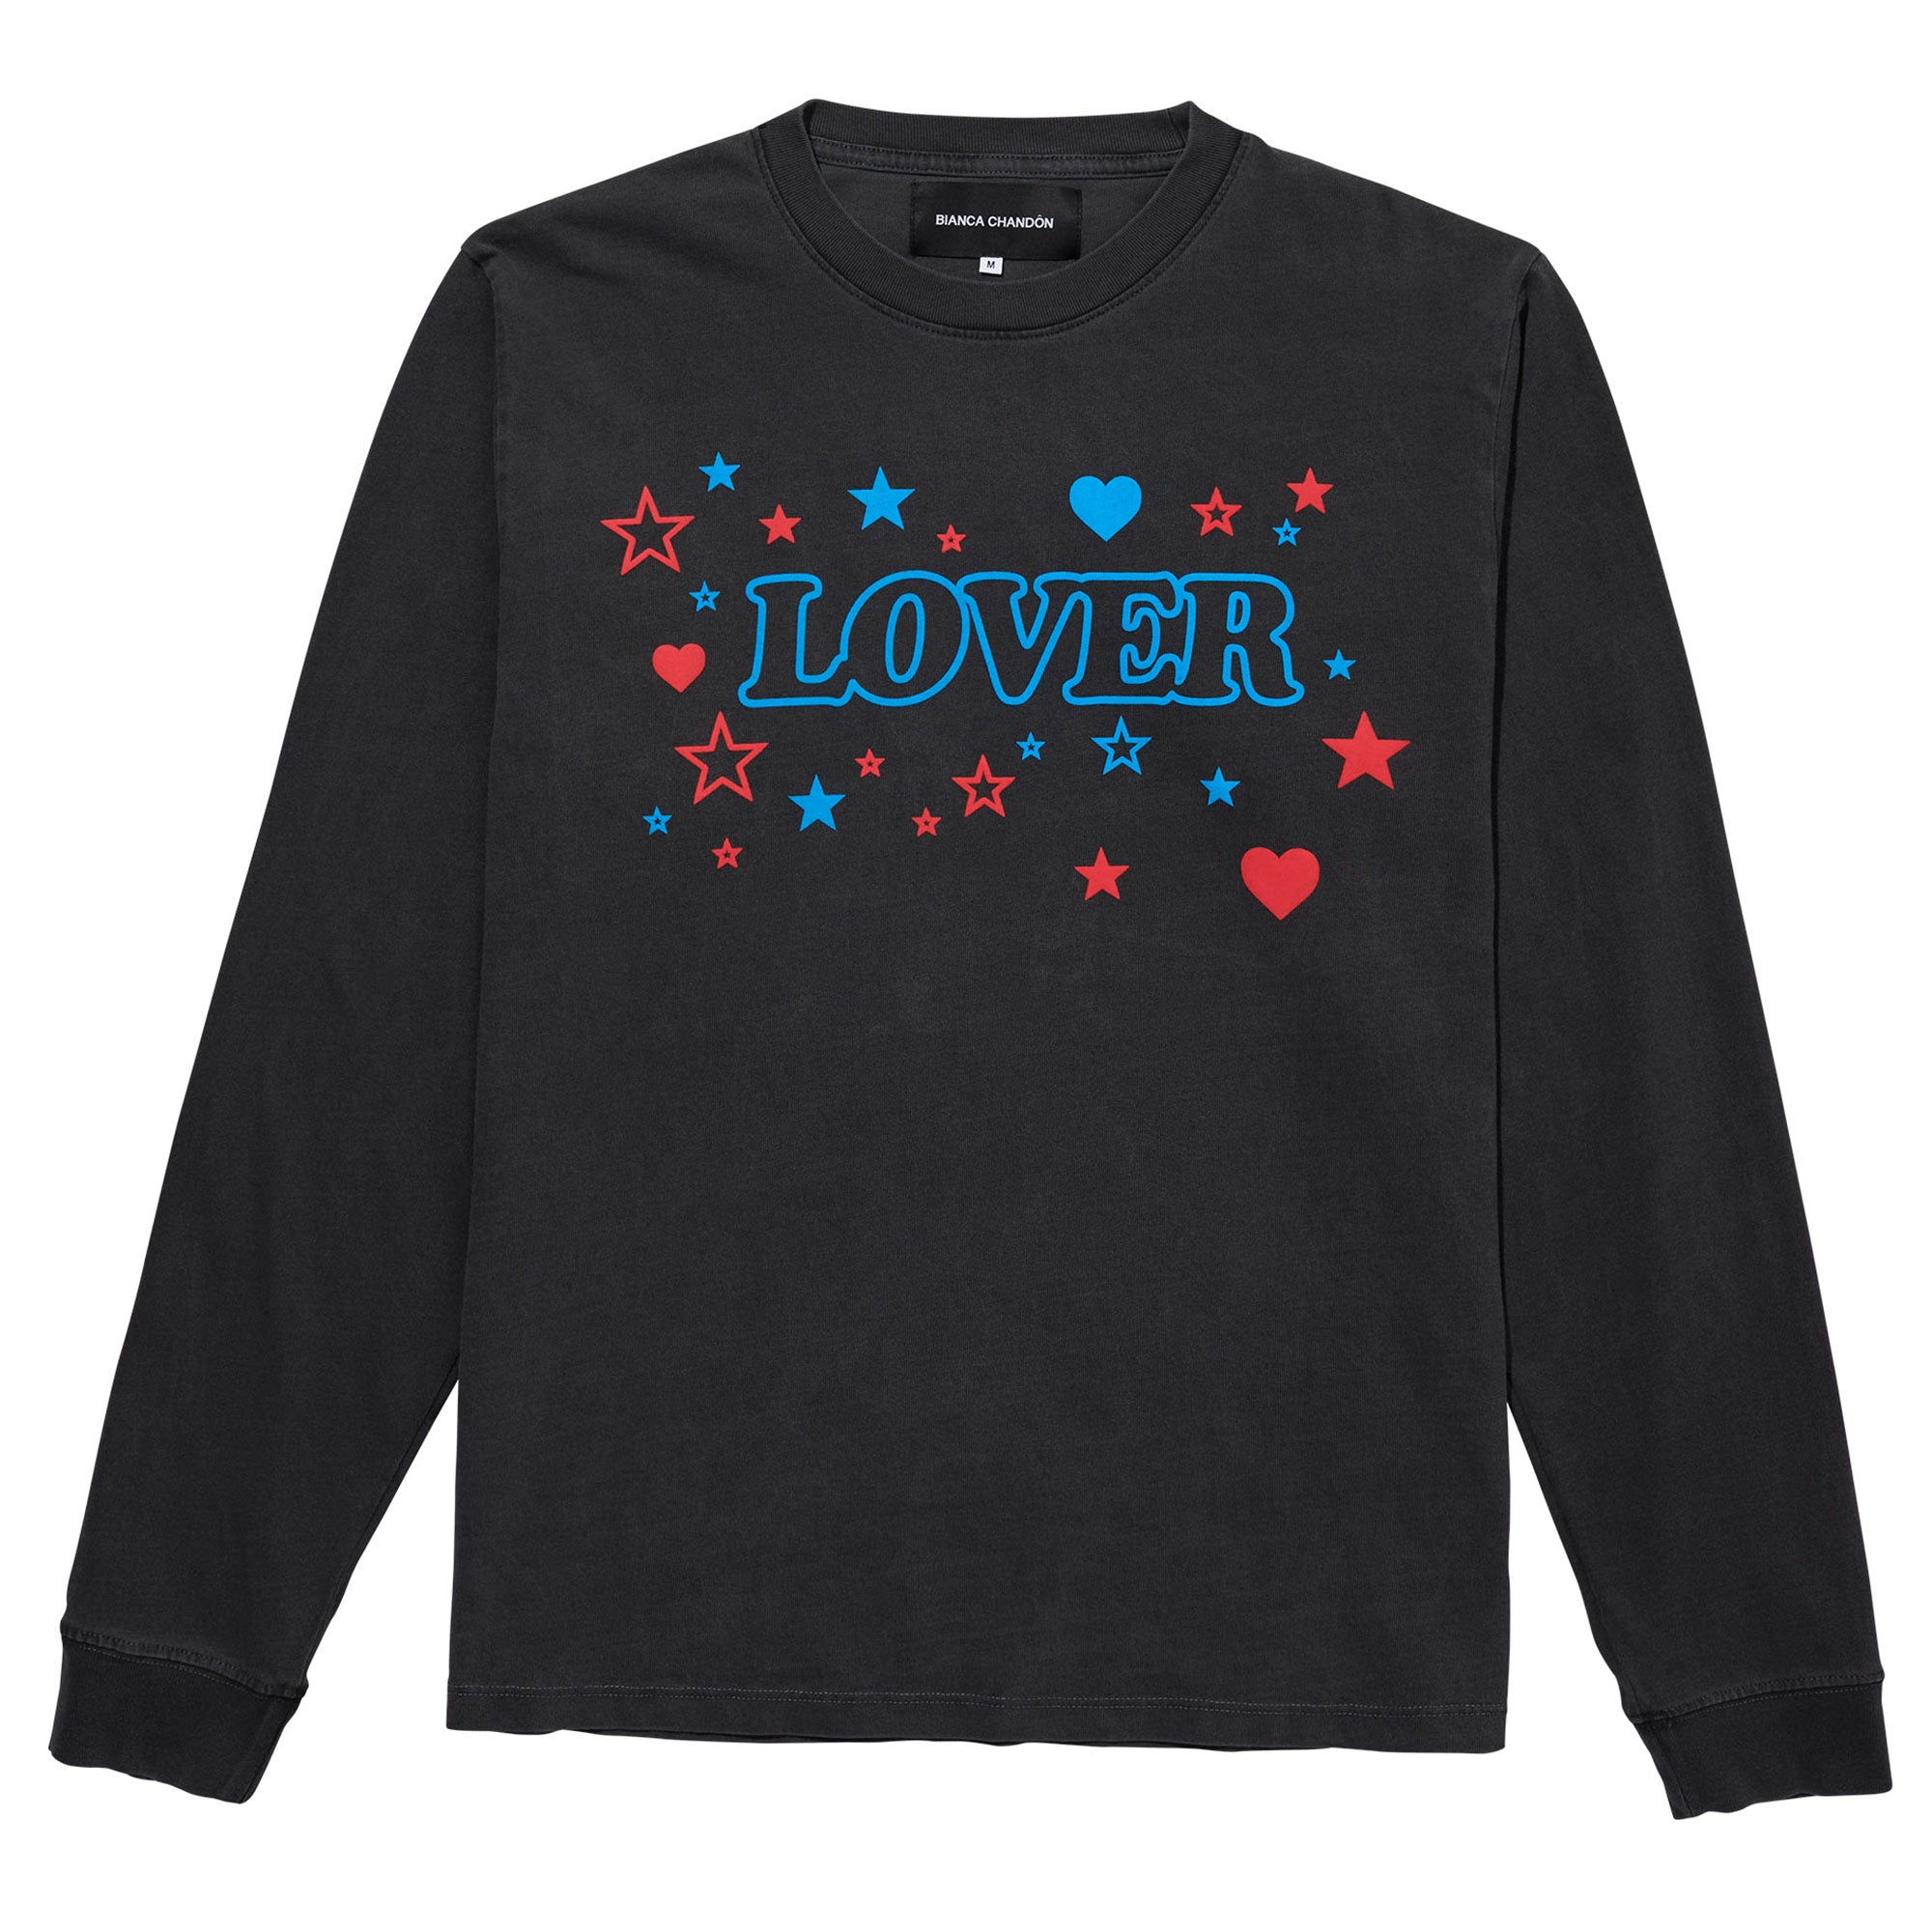 Lover Long Sleeve T-Shirt Black